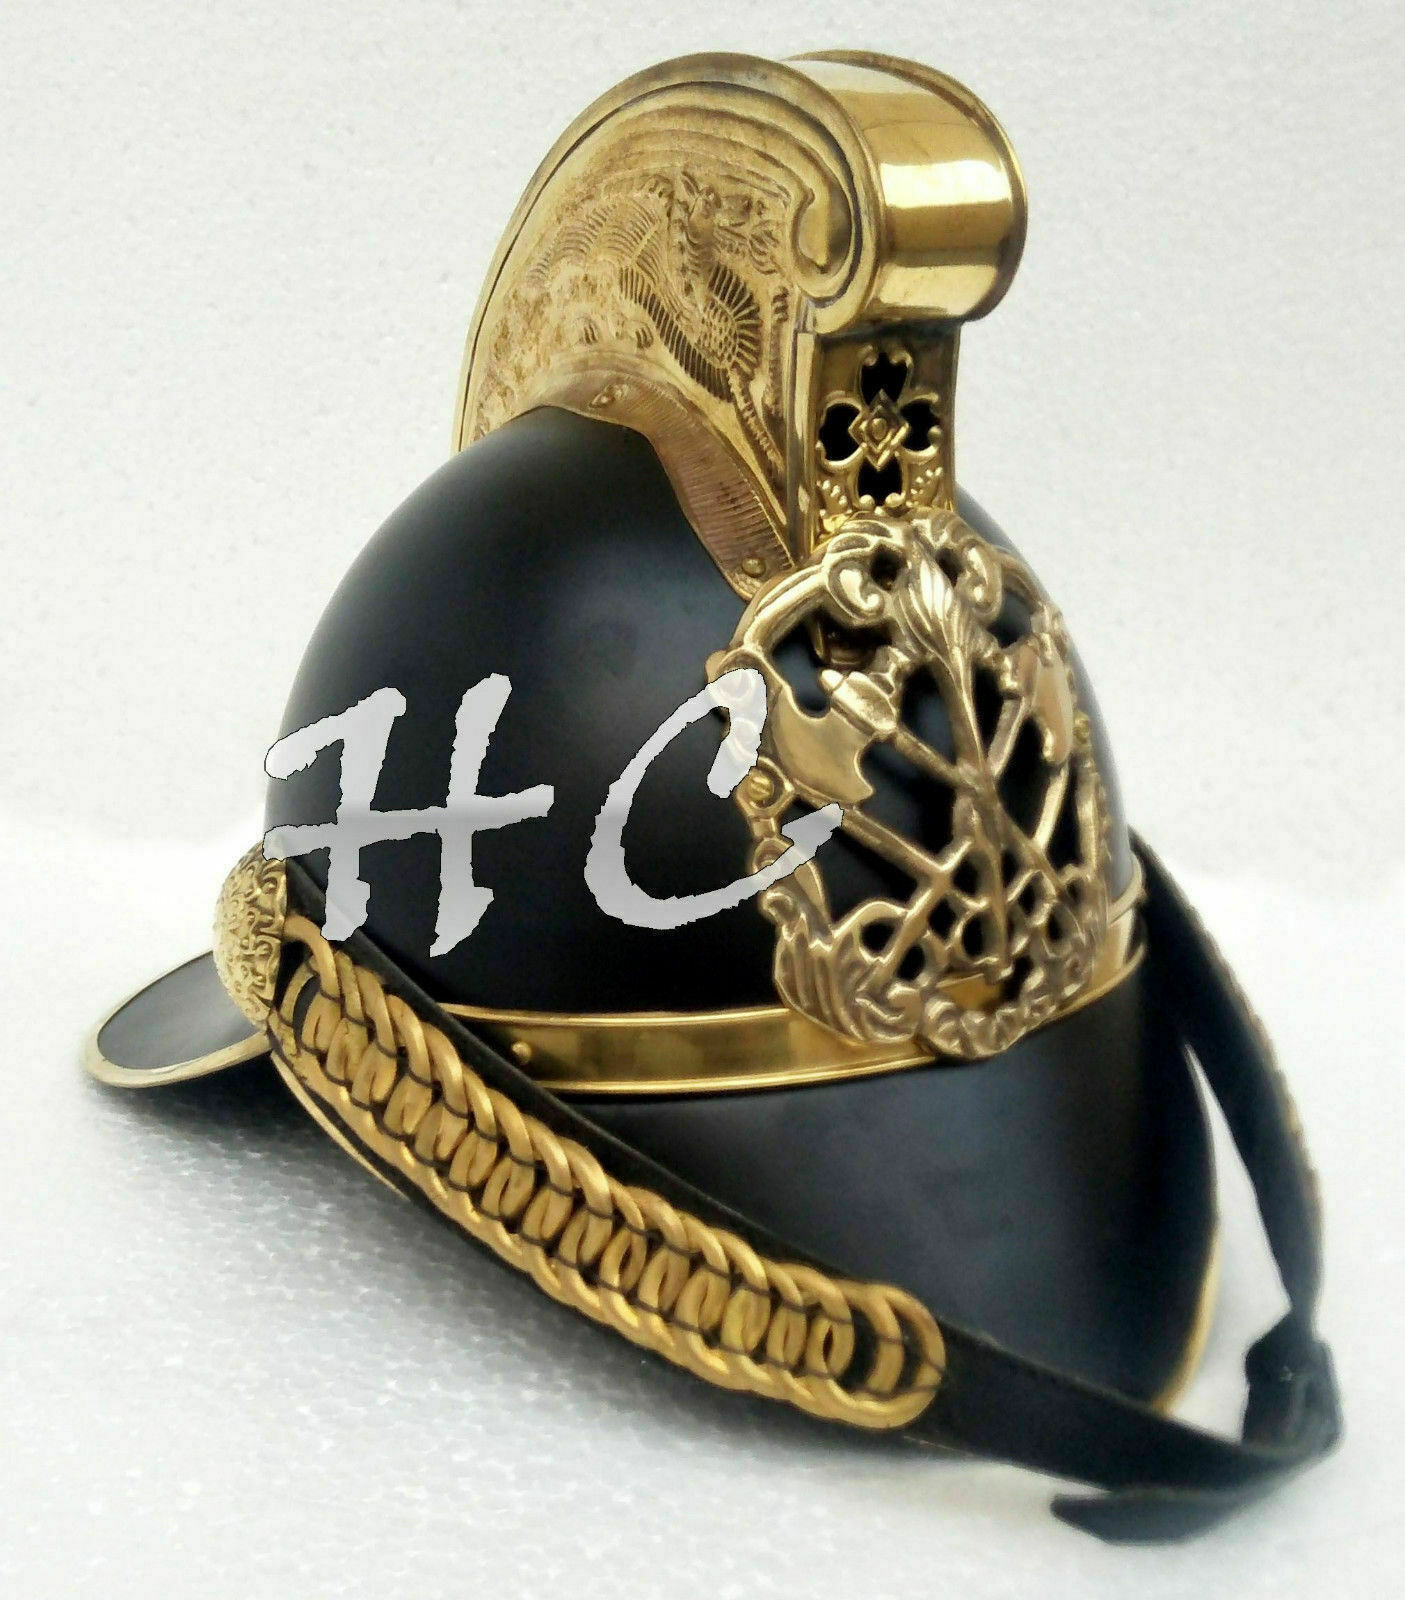 Brass Designer Antique Style Black Chief Fireman Helmet Wearable Replica Gift